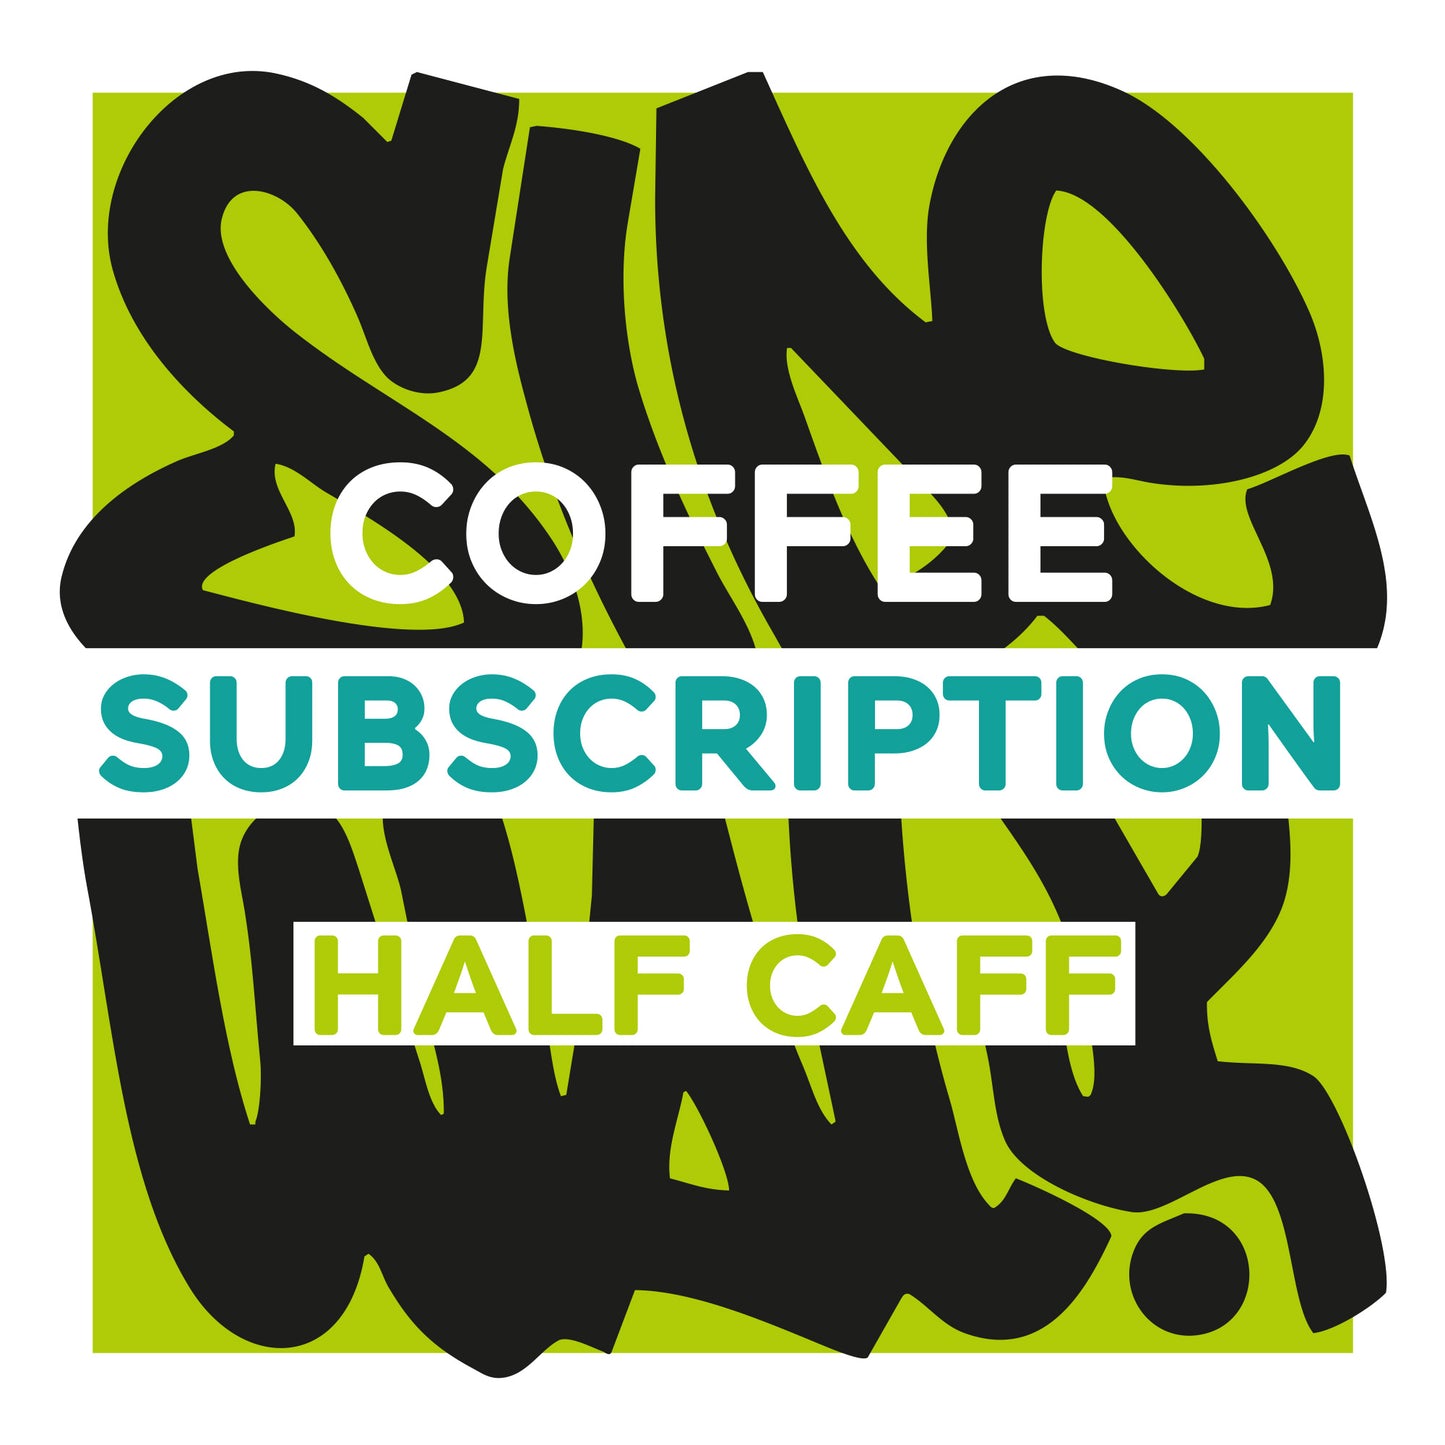 Half Caff Coffee Subscription